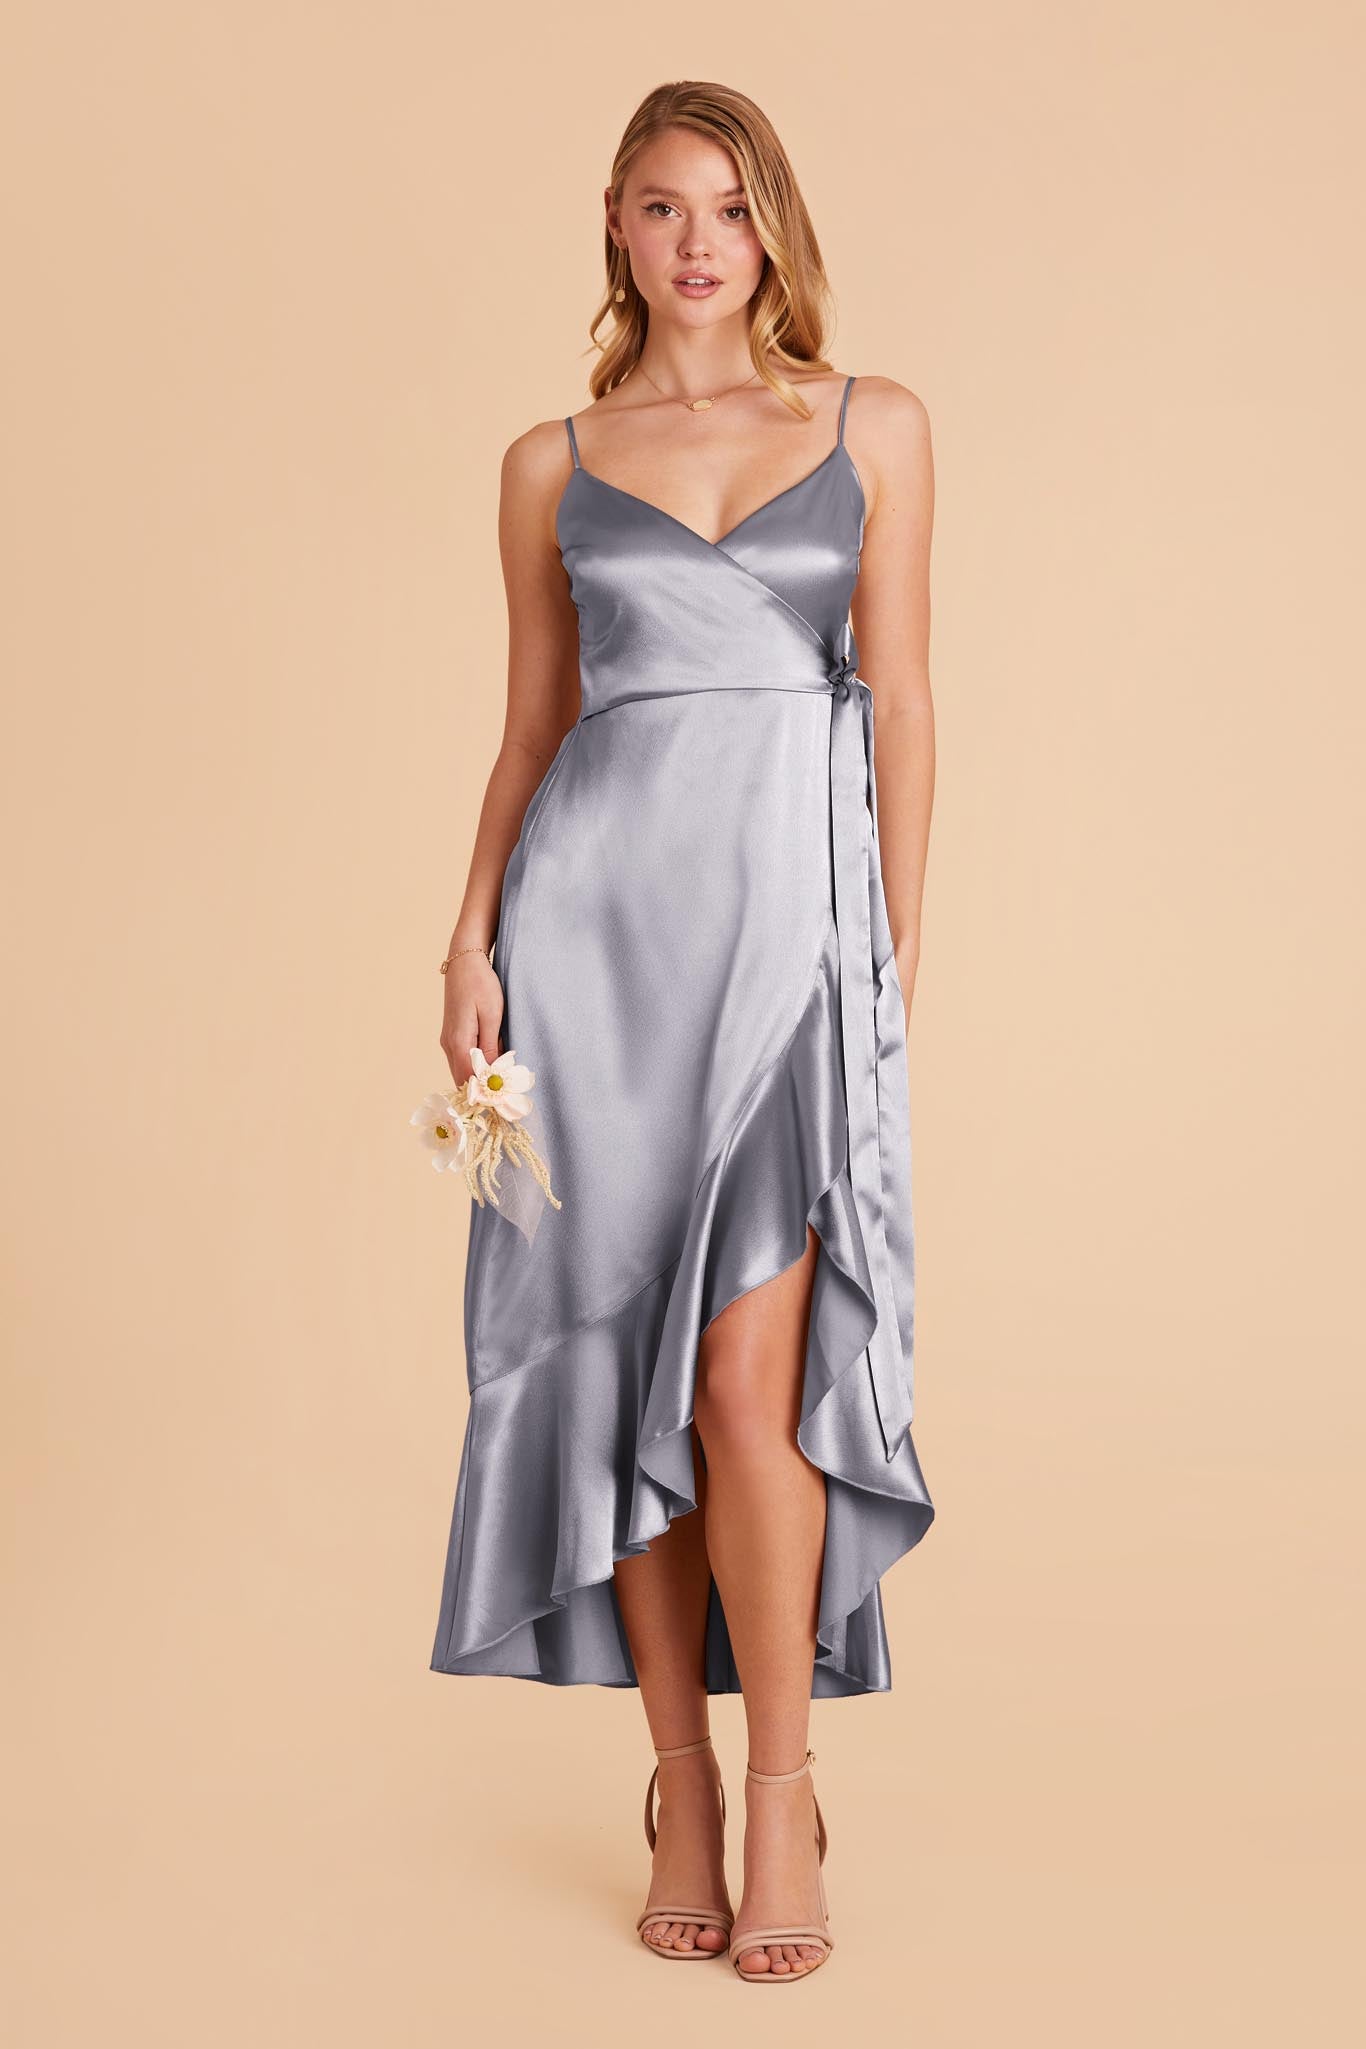 Sleek Dusty Blue Dress - Satin Dress - Midi Dress - Dress - Lulus